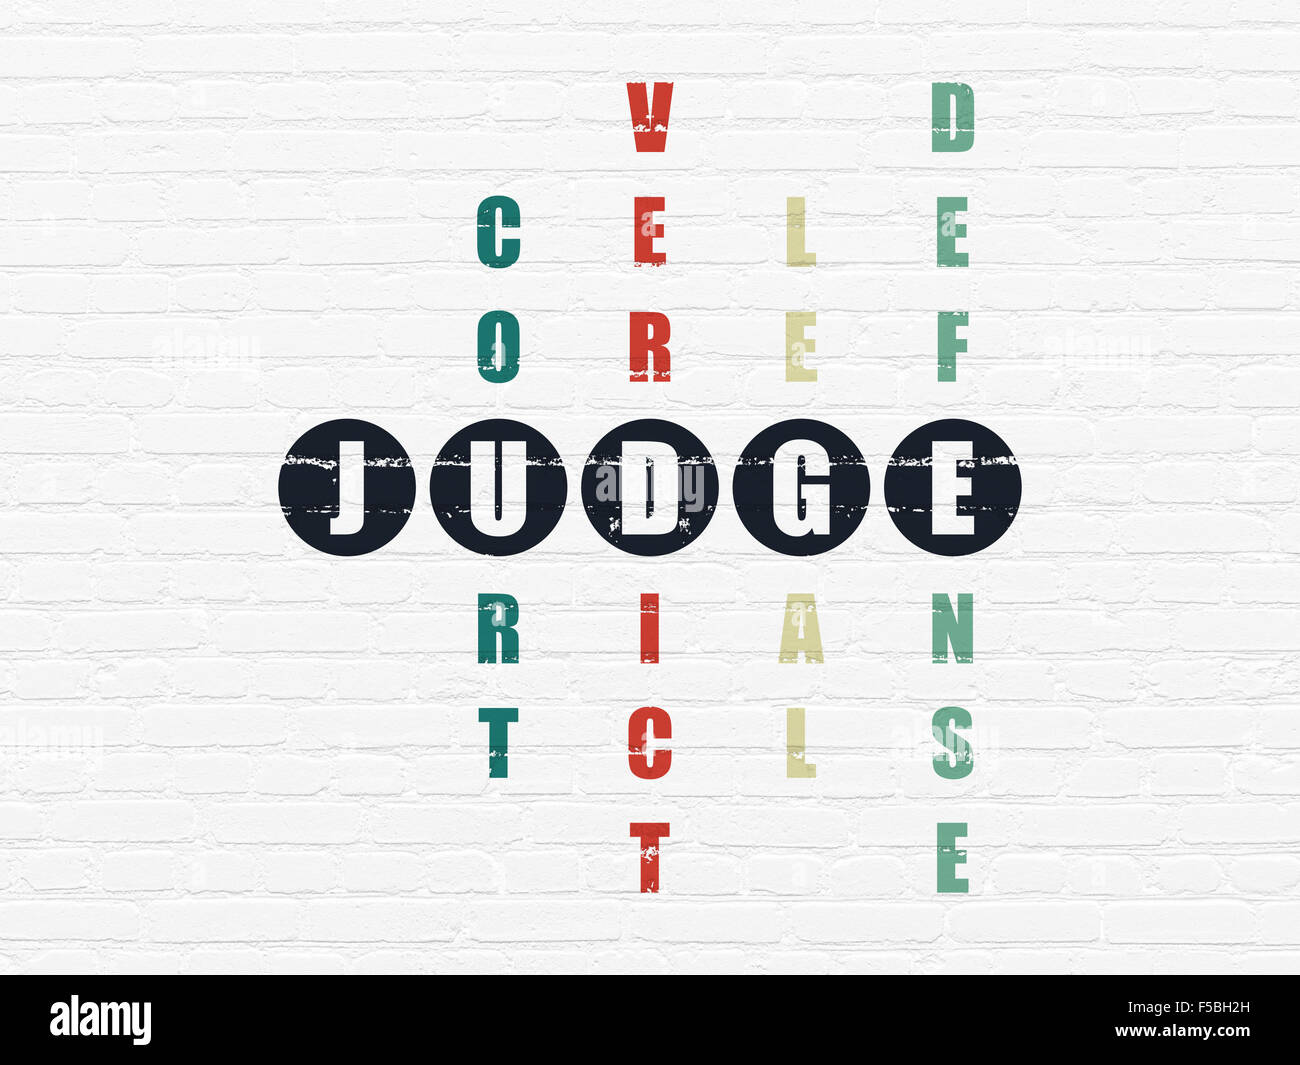 Law concept: Judge in Crossword Puzzle Stock Photo Alamy